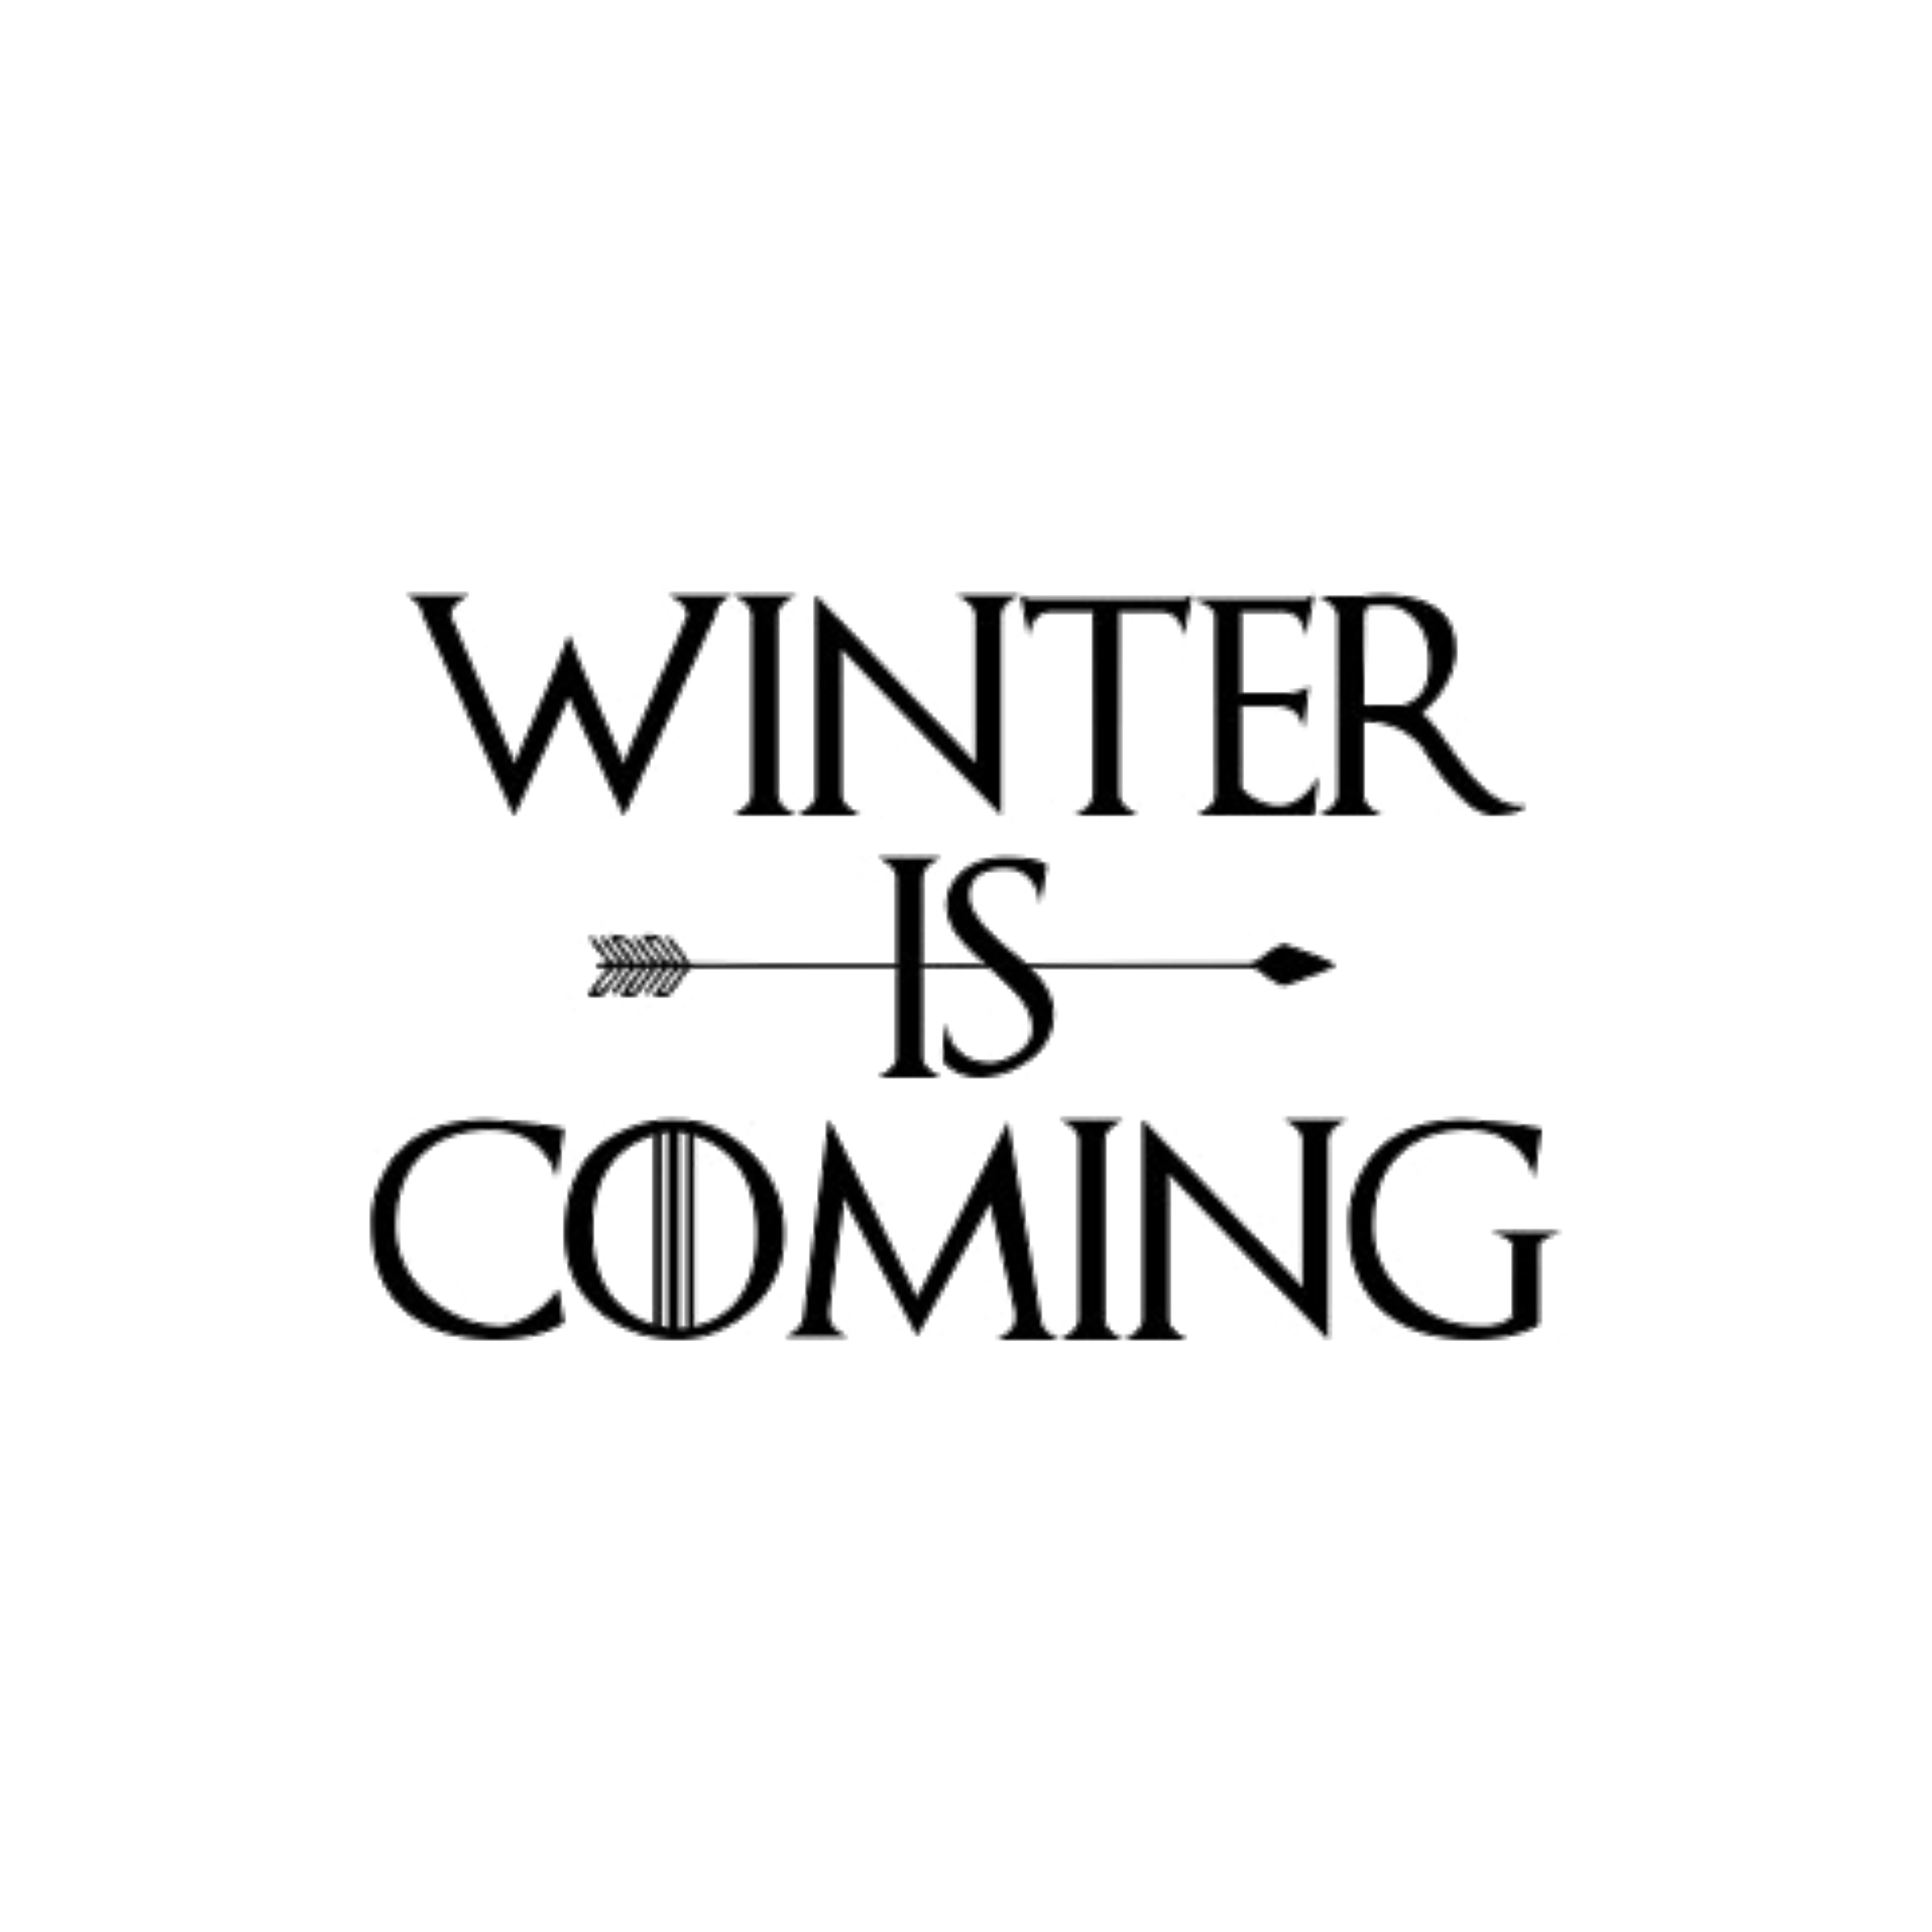 Arriving текст. Winter is coming надпись. Зима близко надпись. Winter is coming шрифт. Зима близко без фона.